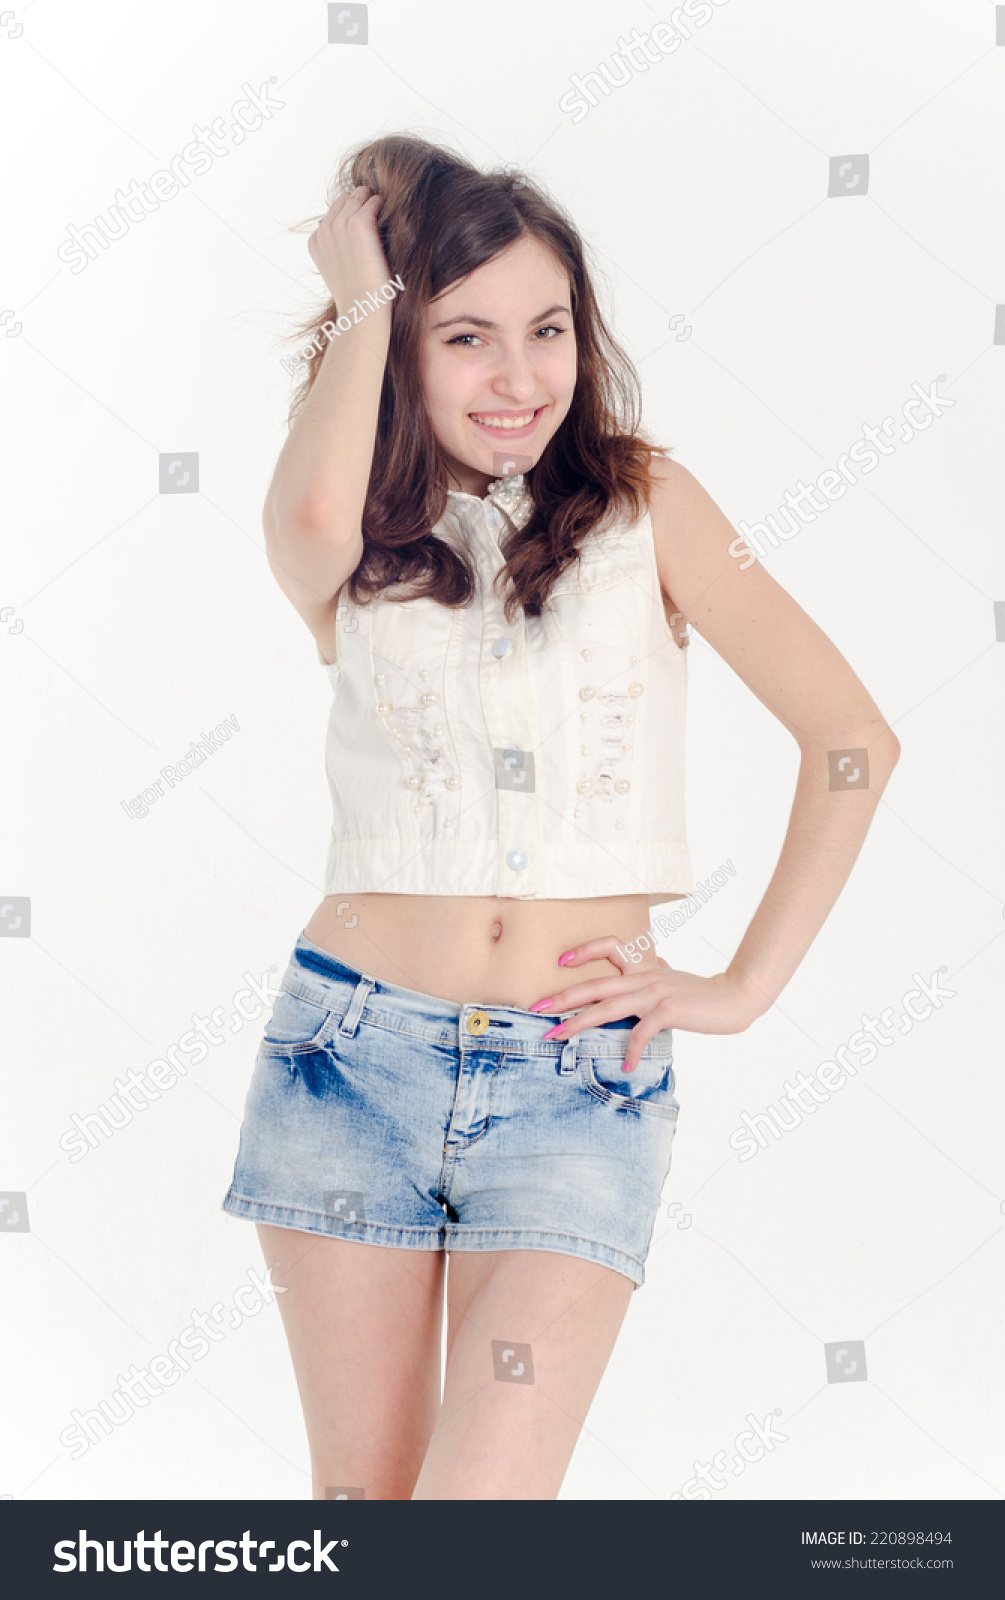 Young Cheerful Teenager Girl Denim Shorts Stock Photo 220898494 ...